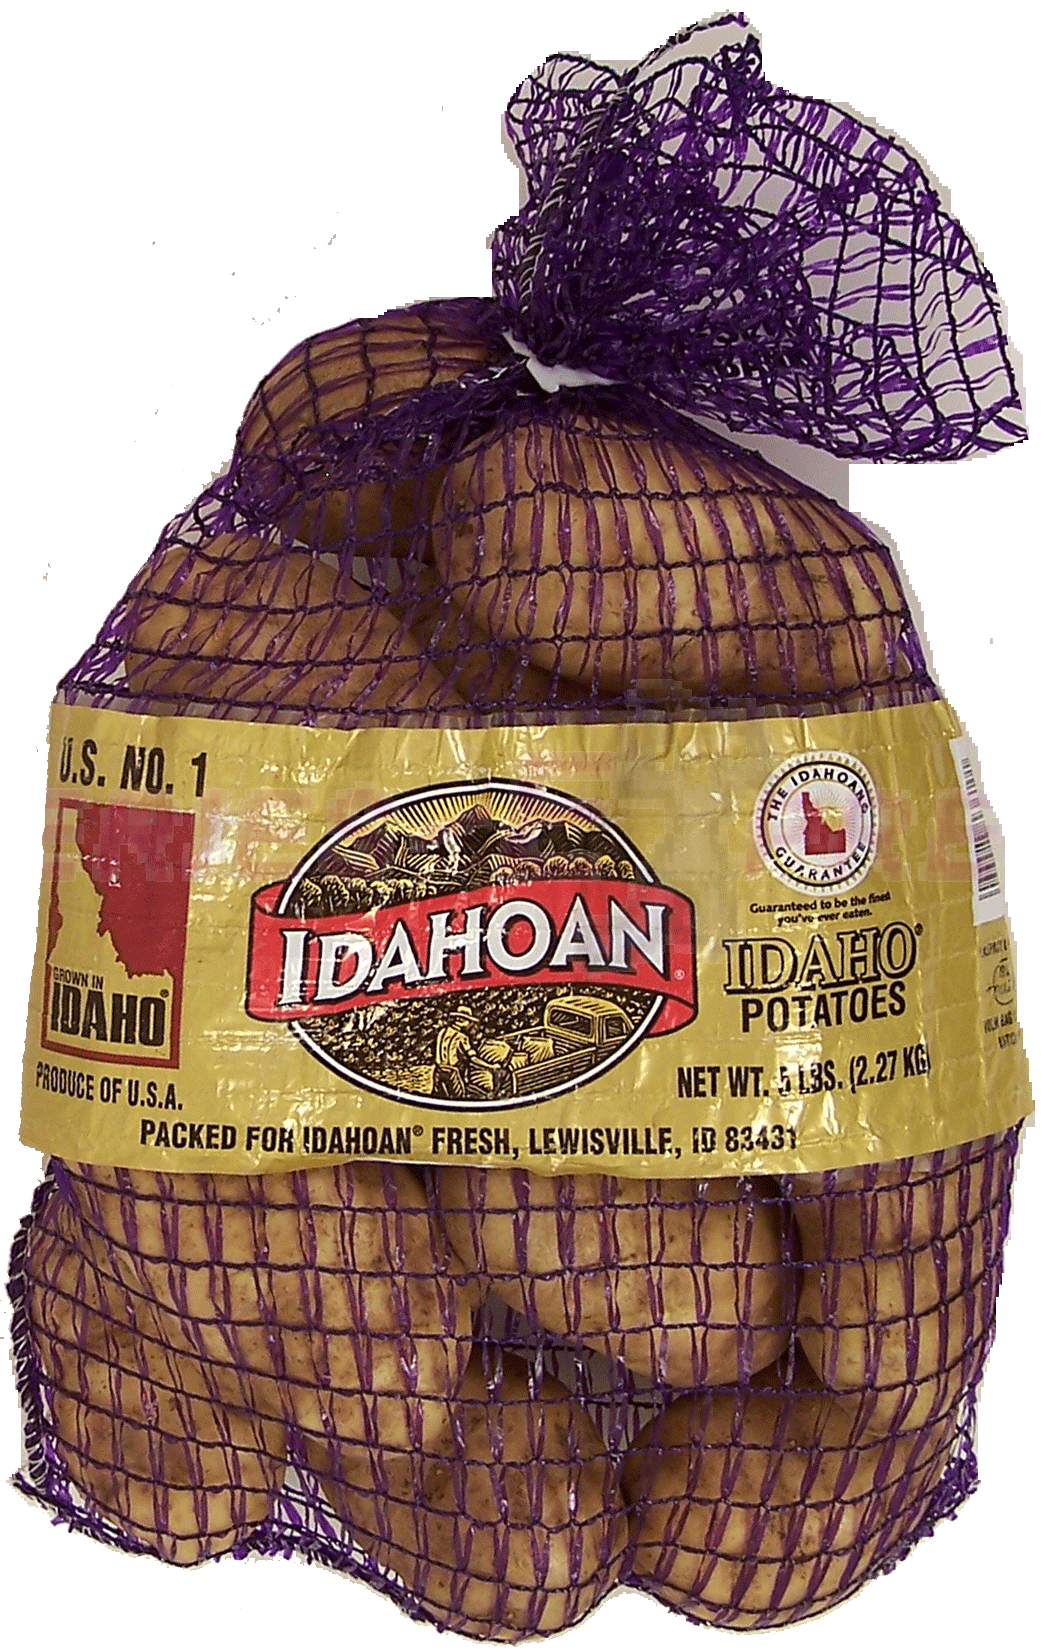 Idahoan  idaho potatoes Full-Size Picture